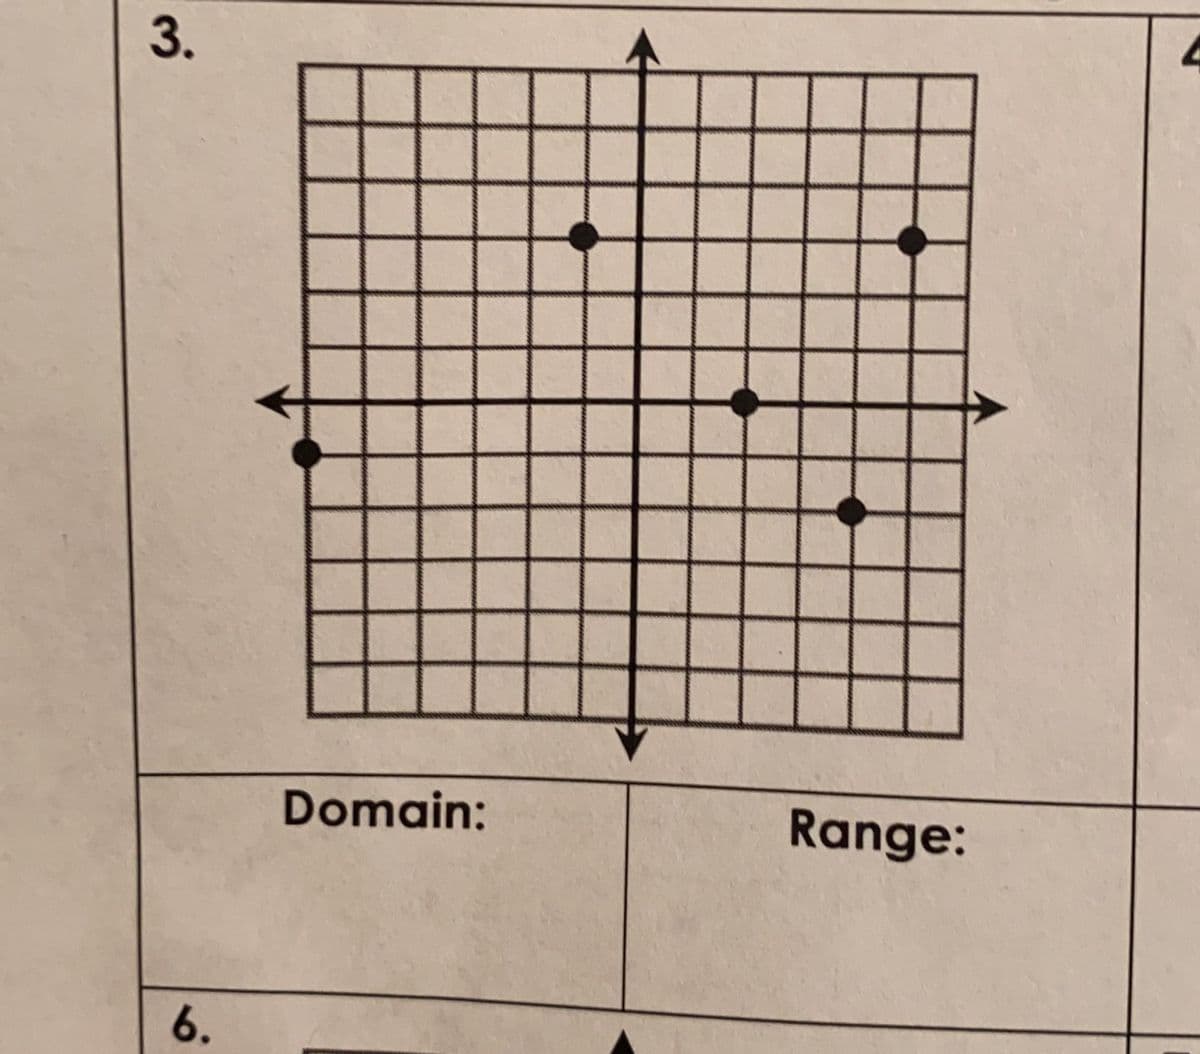 3.
Domain:
Range:
6.
